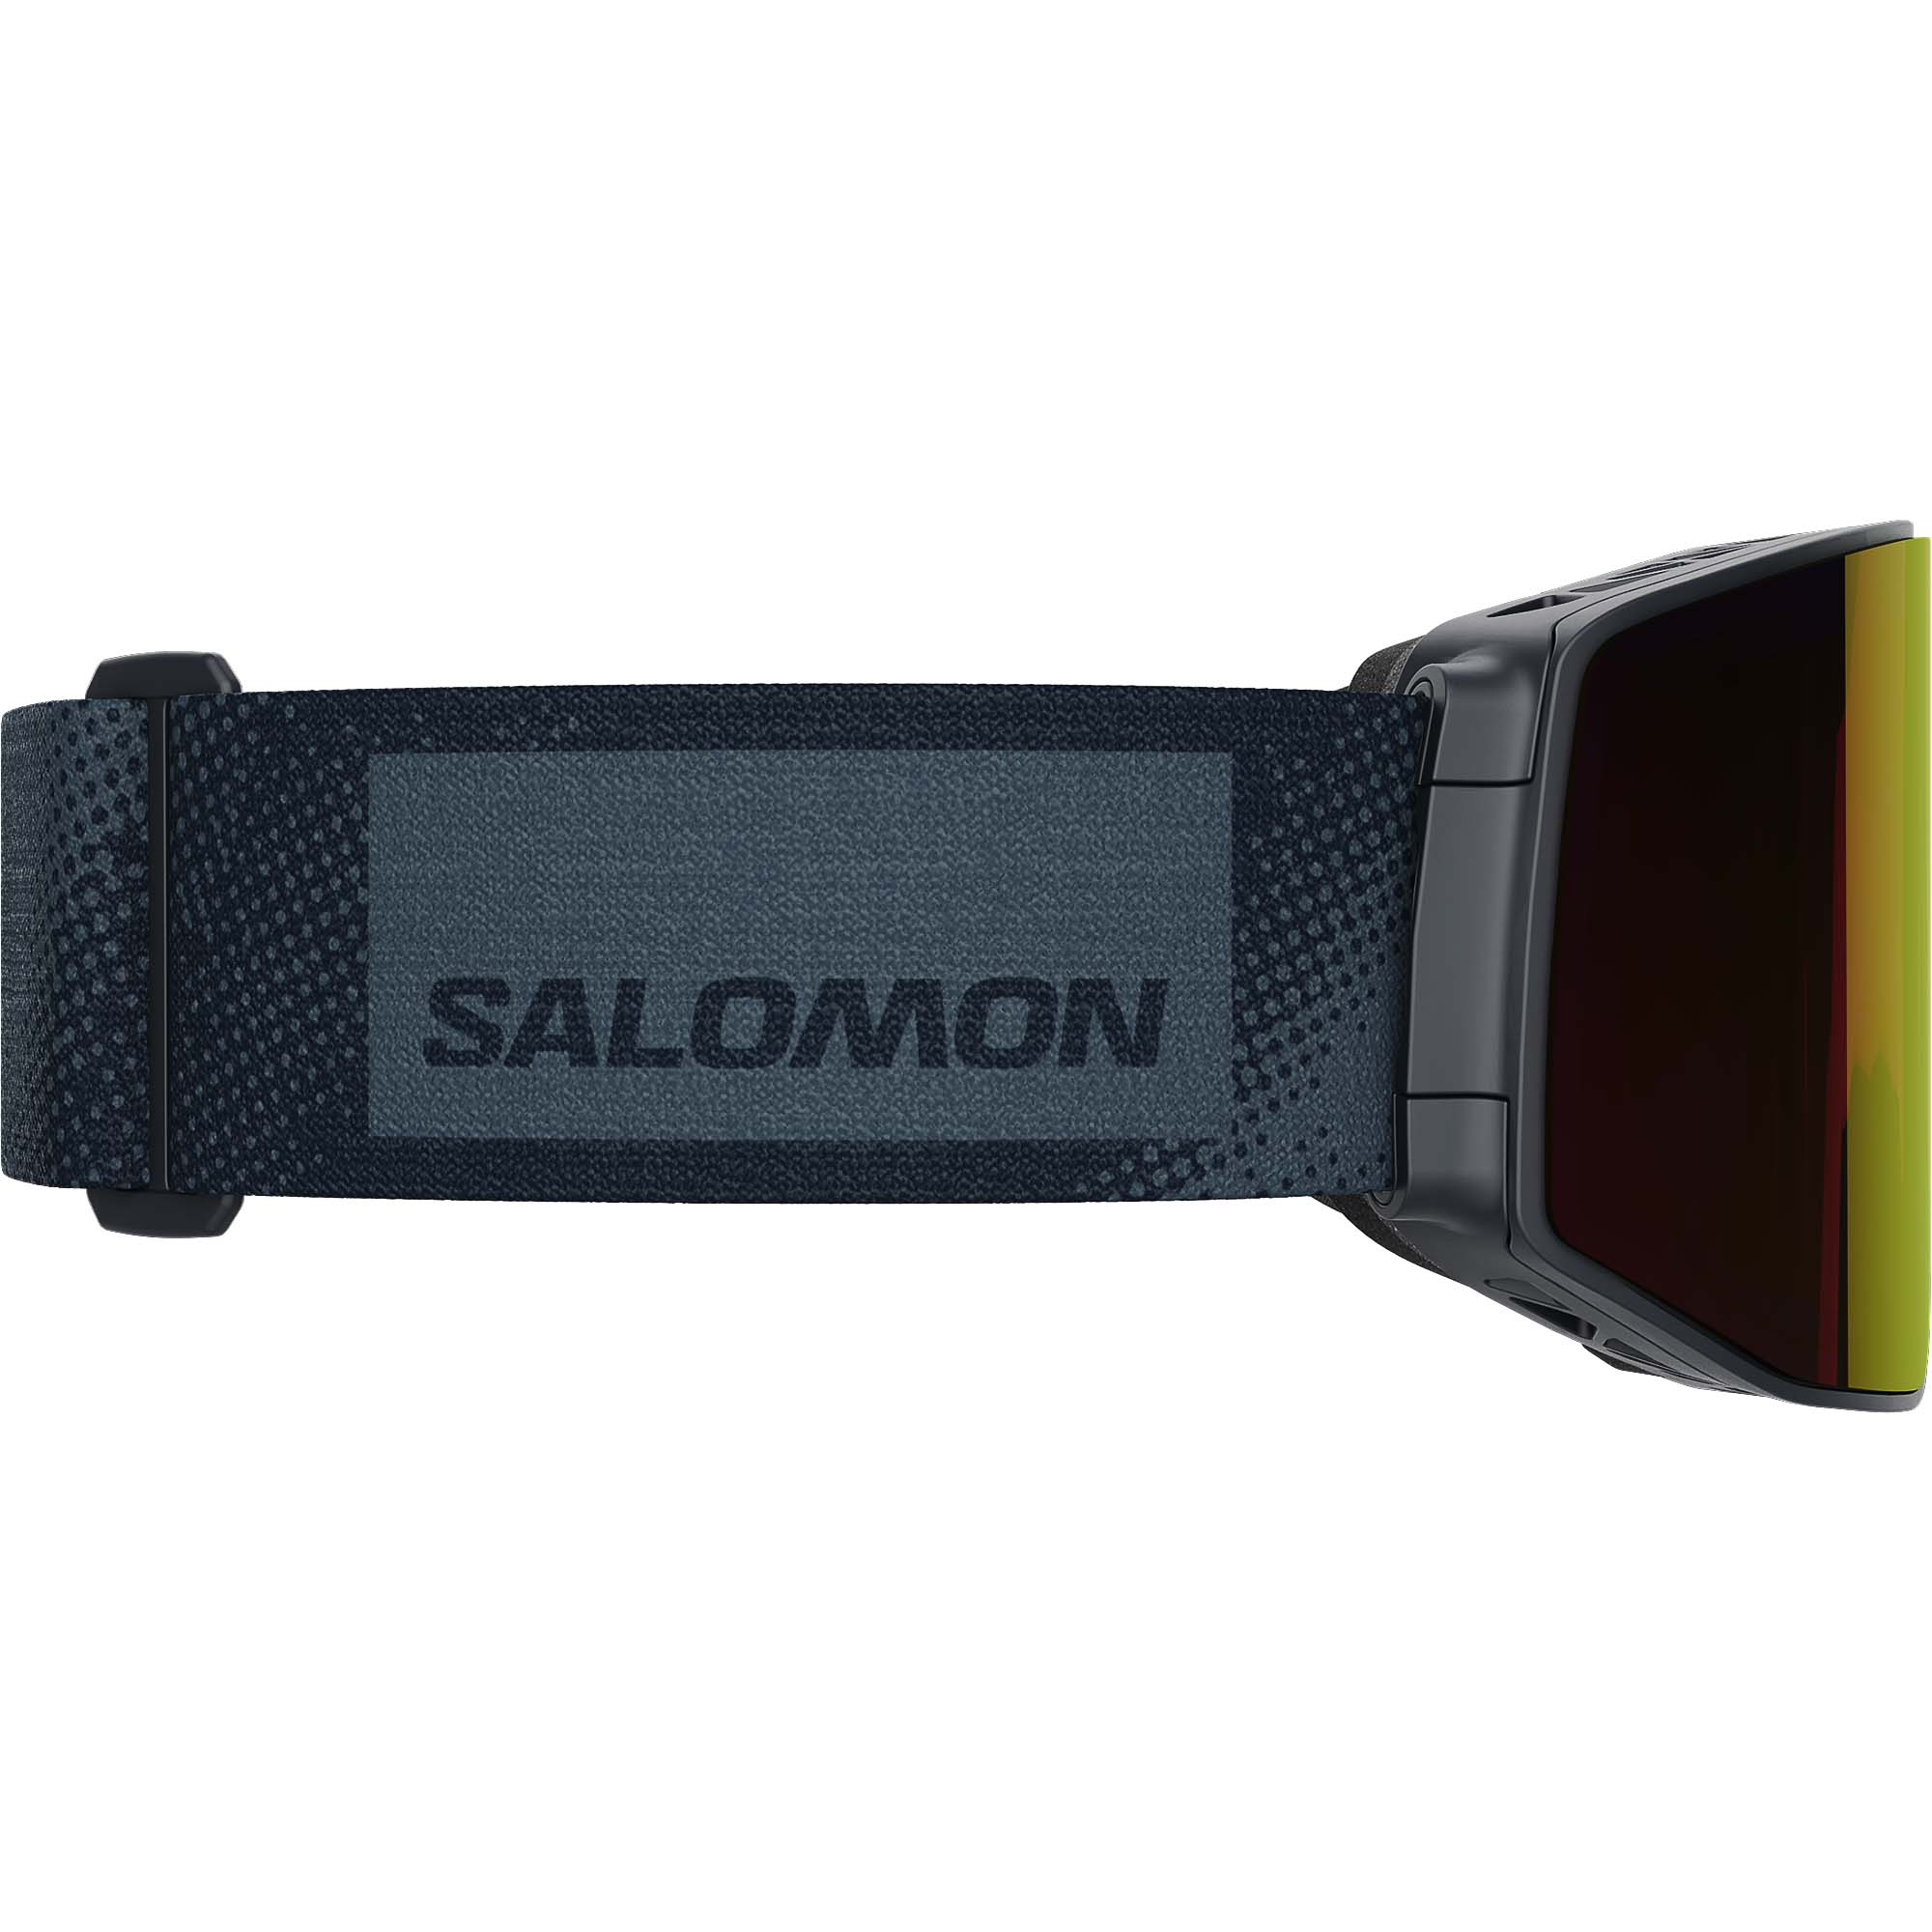 Salomon Sentry Prime Sigma Photo Snowboard/Ski Goggles